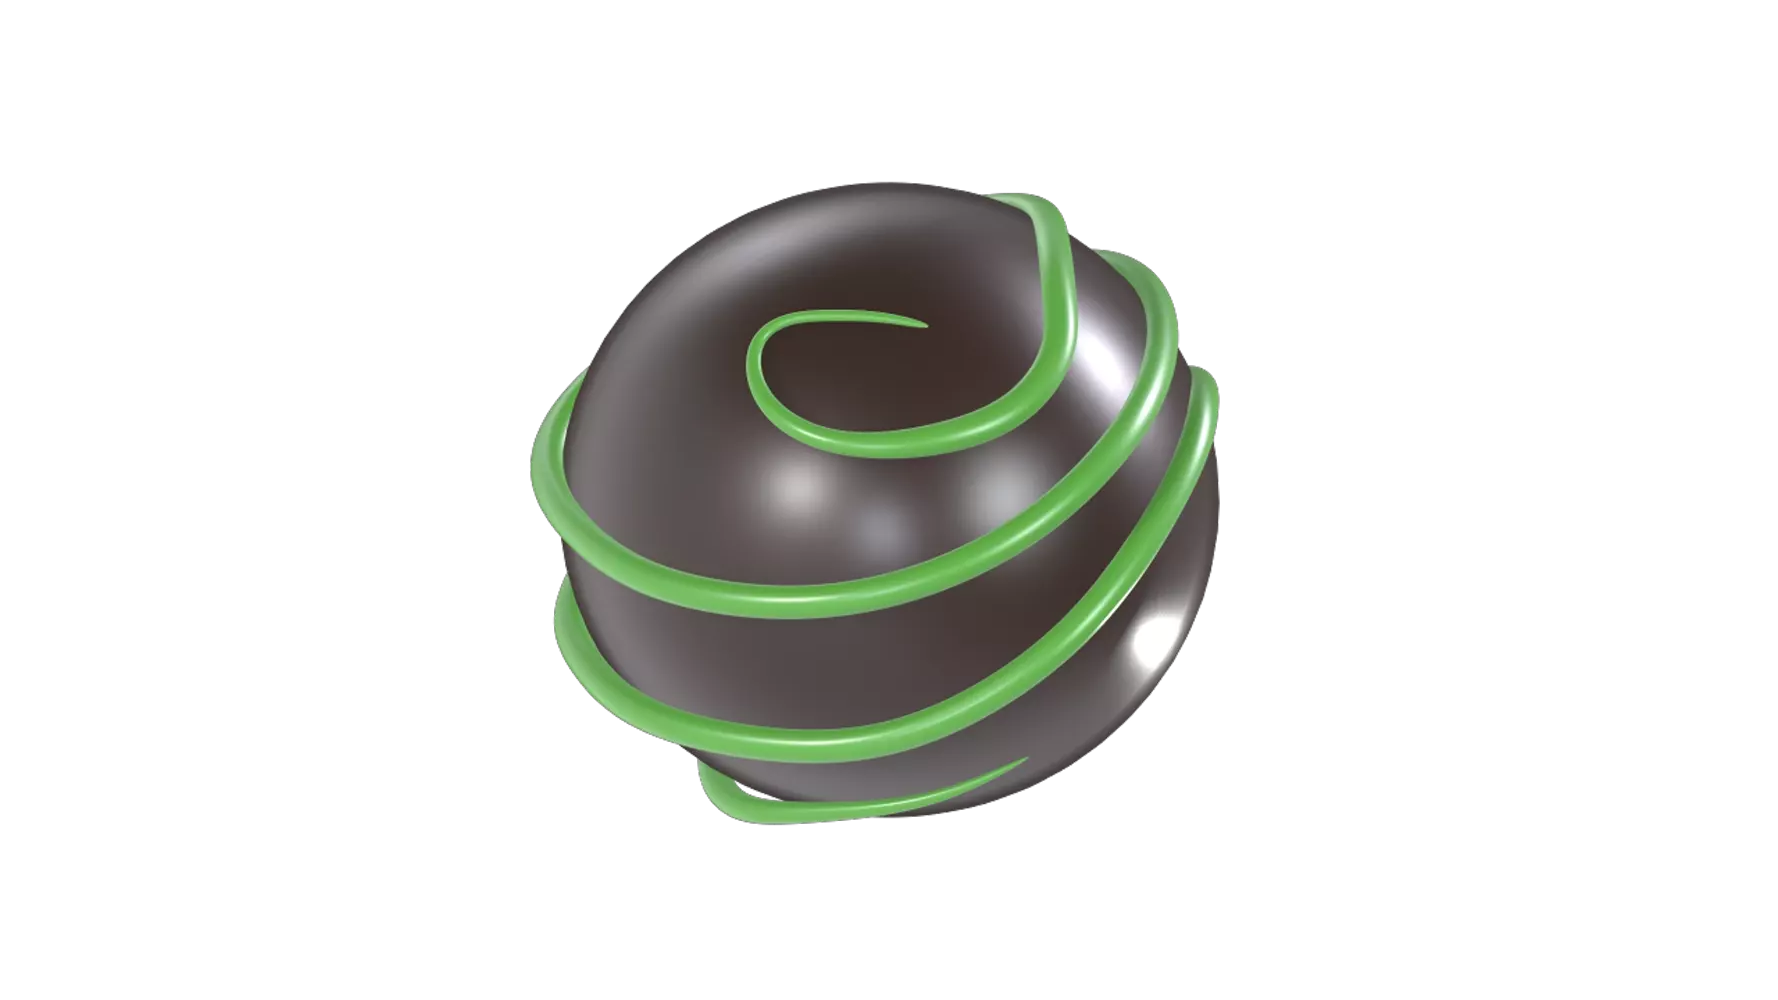 Chocolate Ball With Matcha Cream 3D Graphic